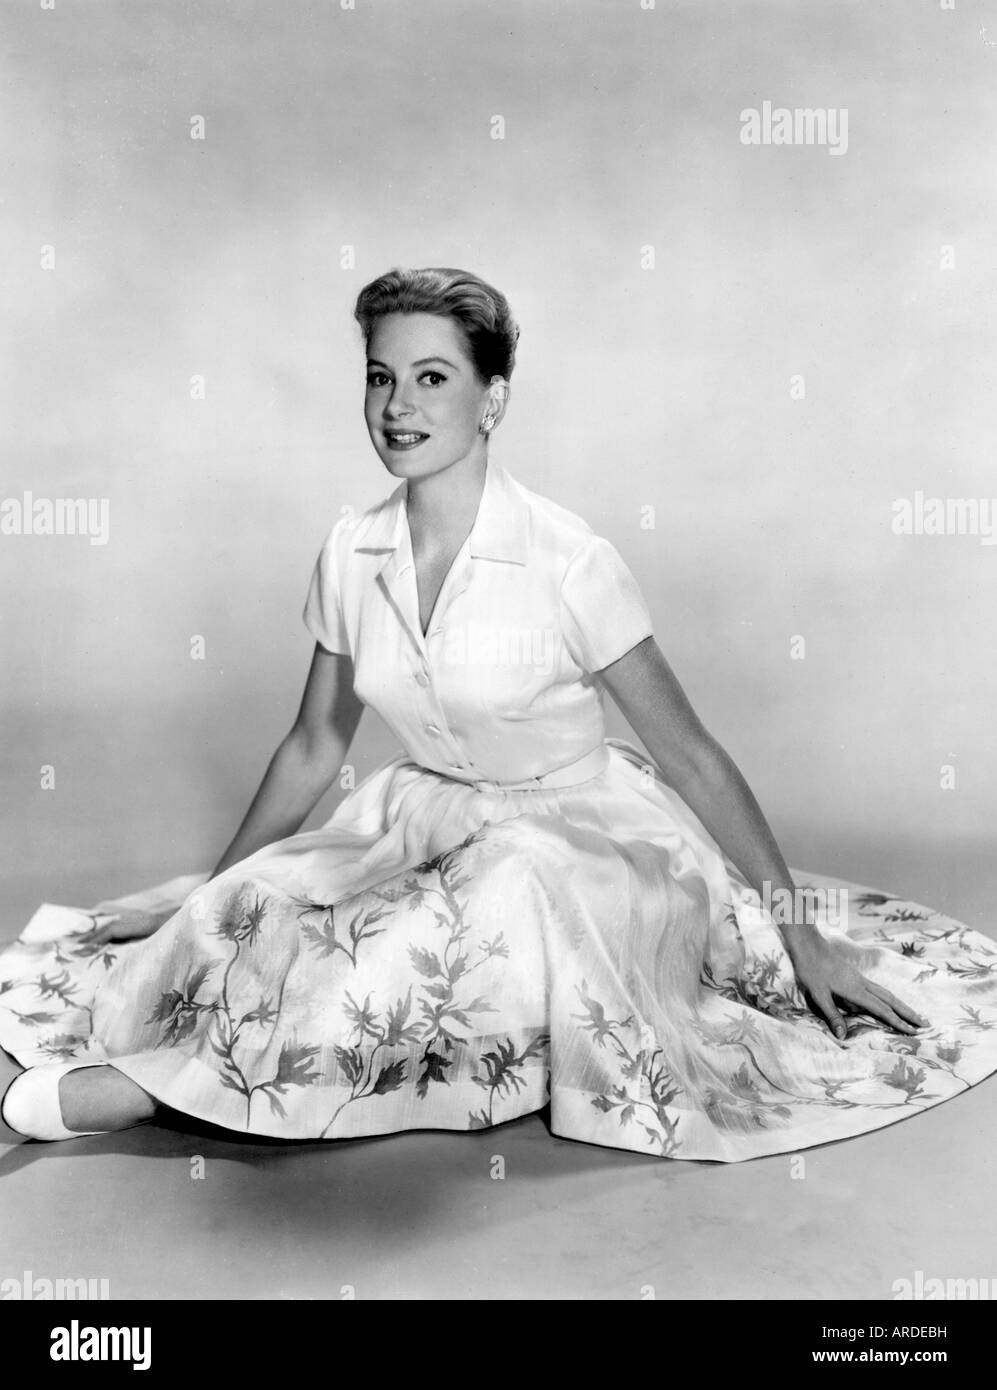 British actress 1950 Black and White Stock Photos & Images - Alamy